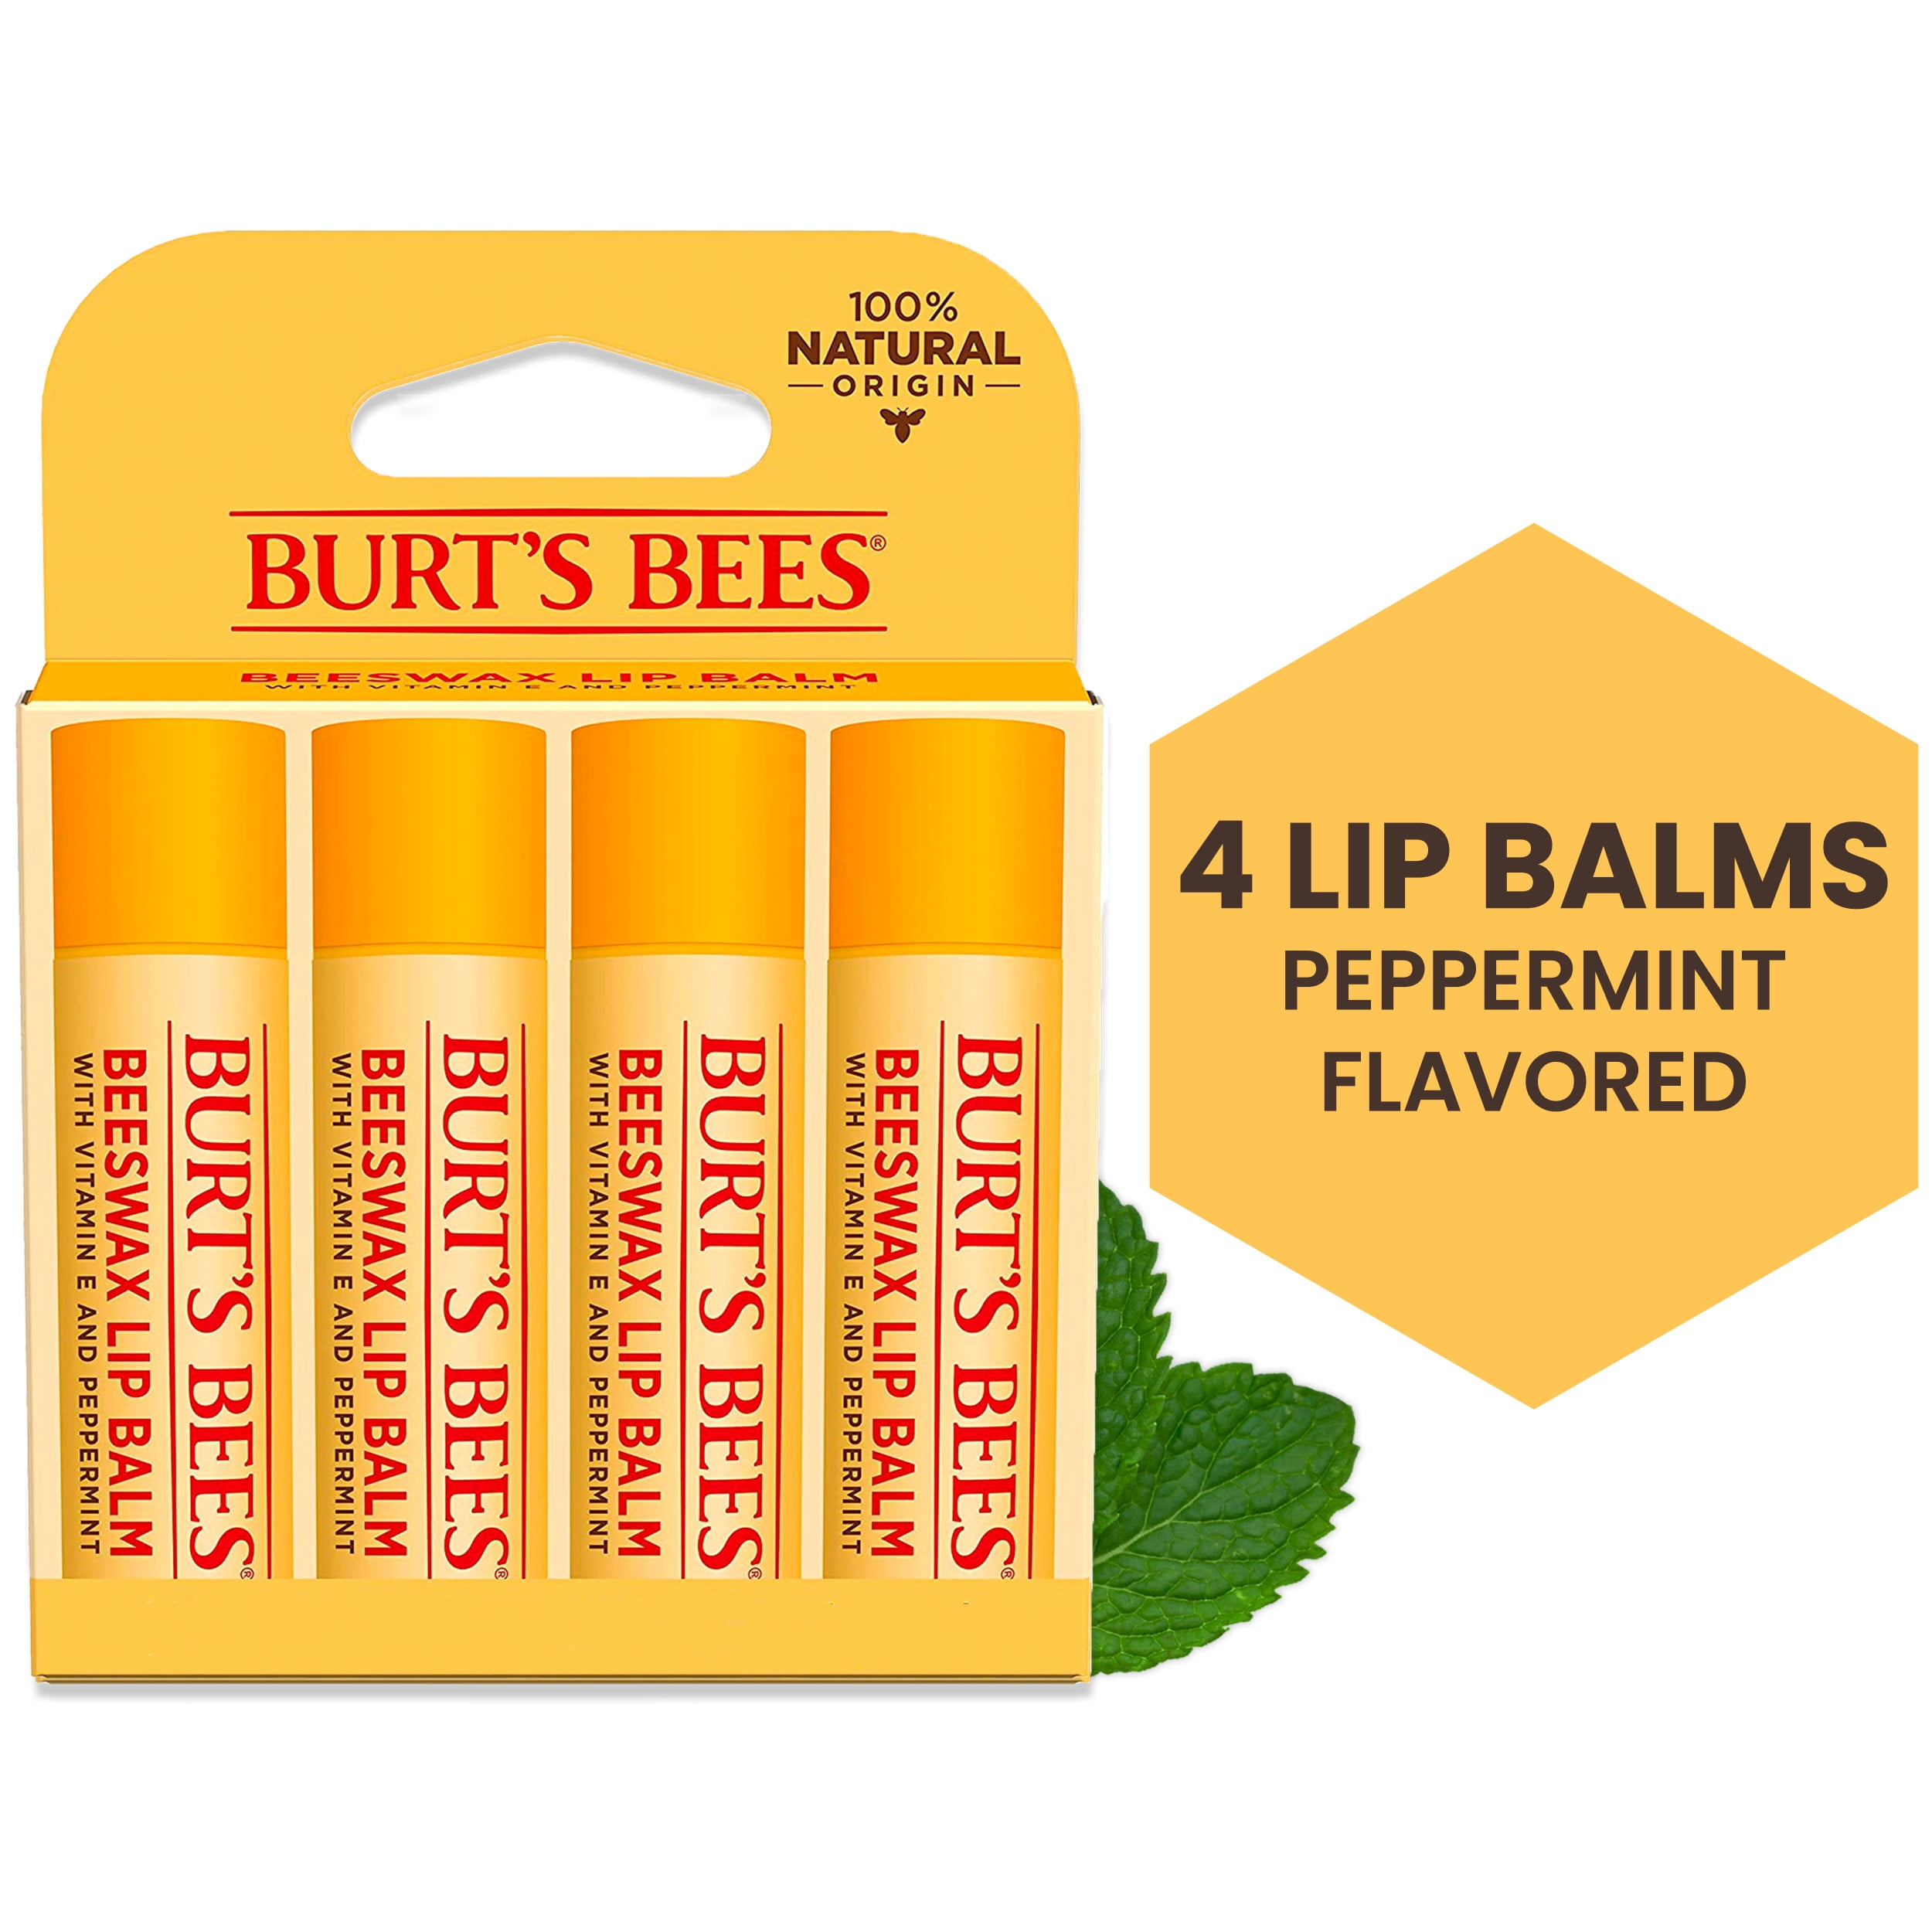 Burts Bees 100% Natural Origin Beeswax Lip Balm - 4 Count - Albertsons